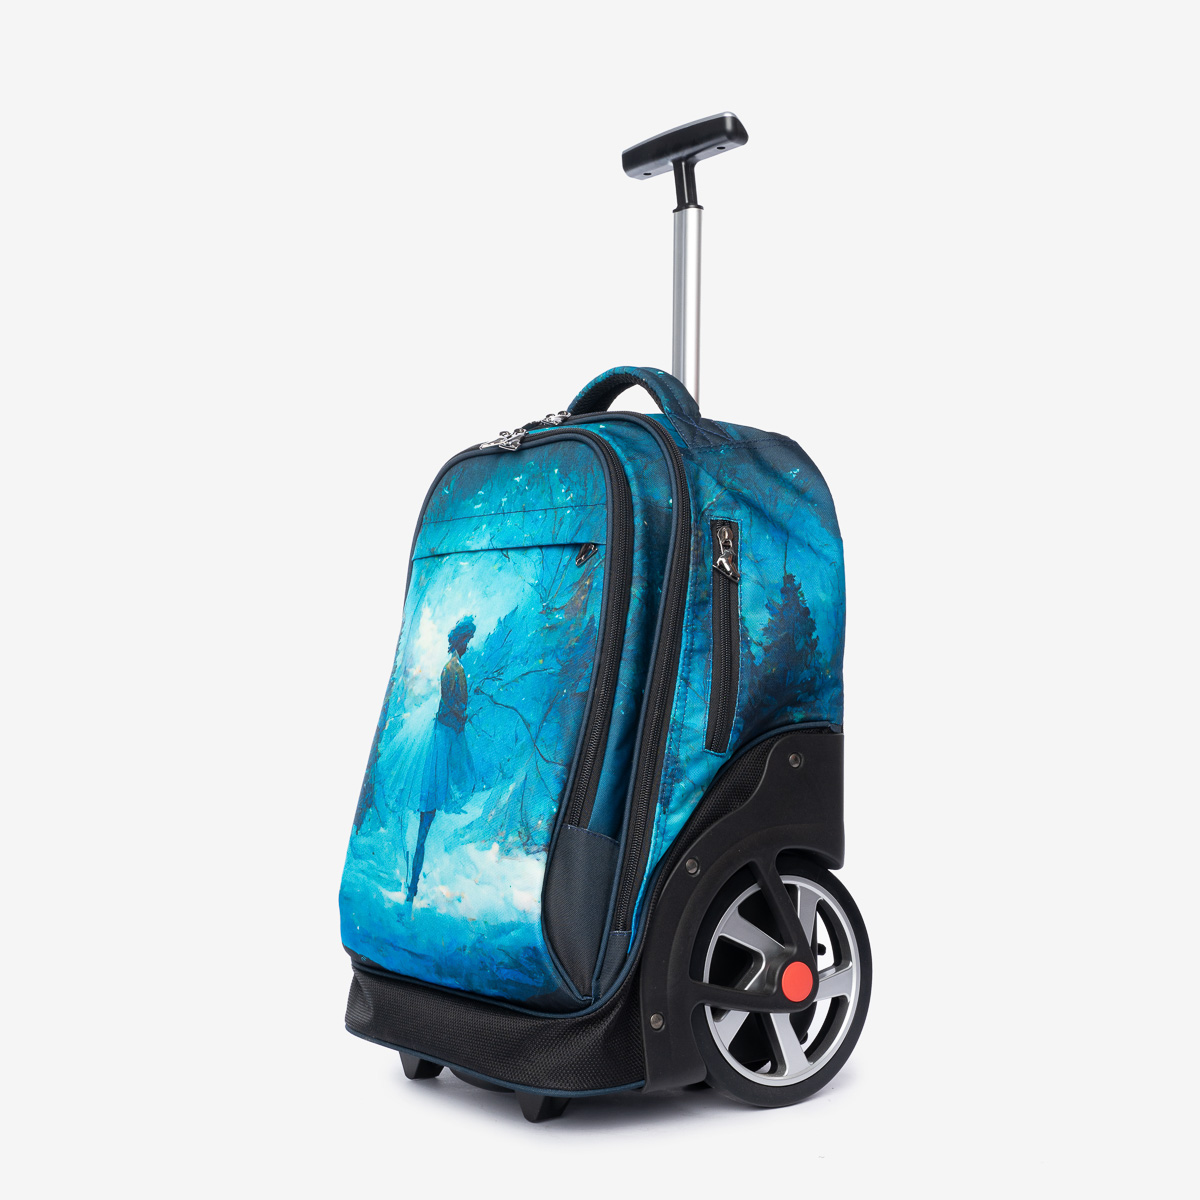 Колеса cube. Cube сумки с колесиками. Рюкзак на колесах Cube. Куб на колесиках. Cube рюкзак для фигурного с большими колесами.